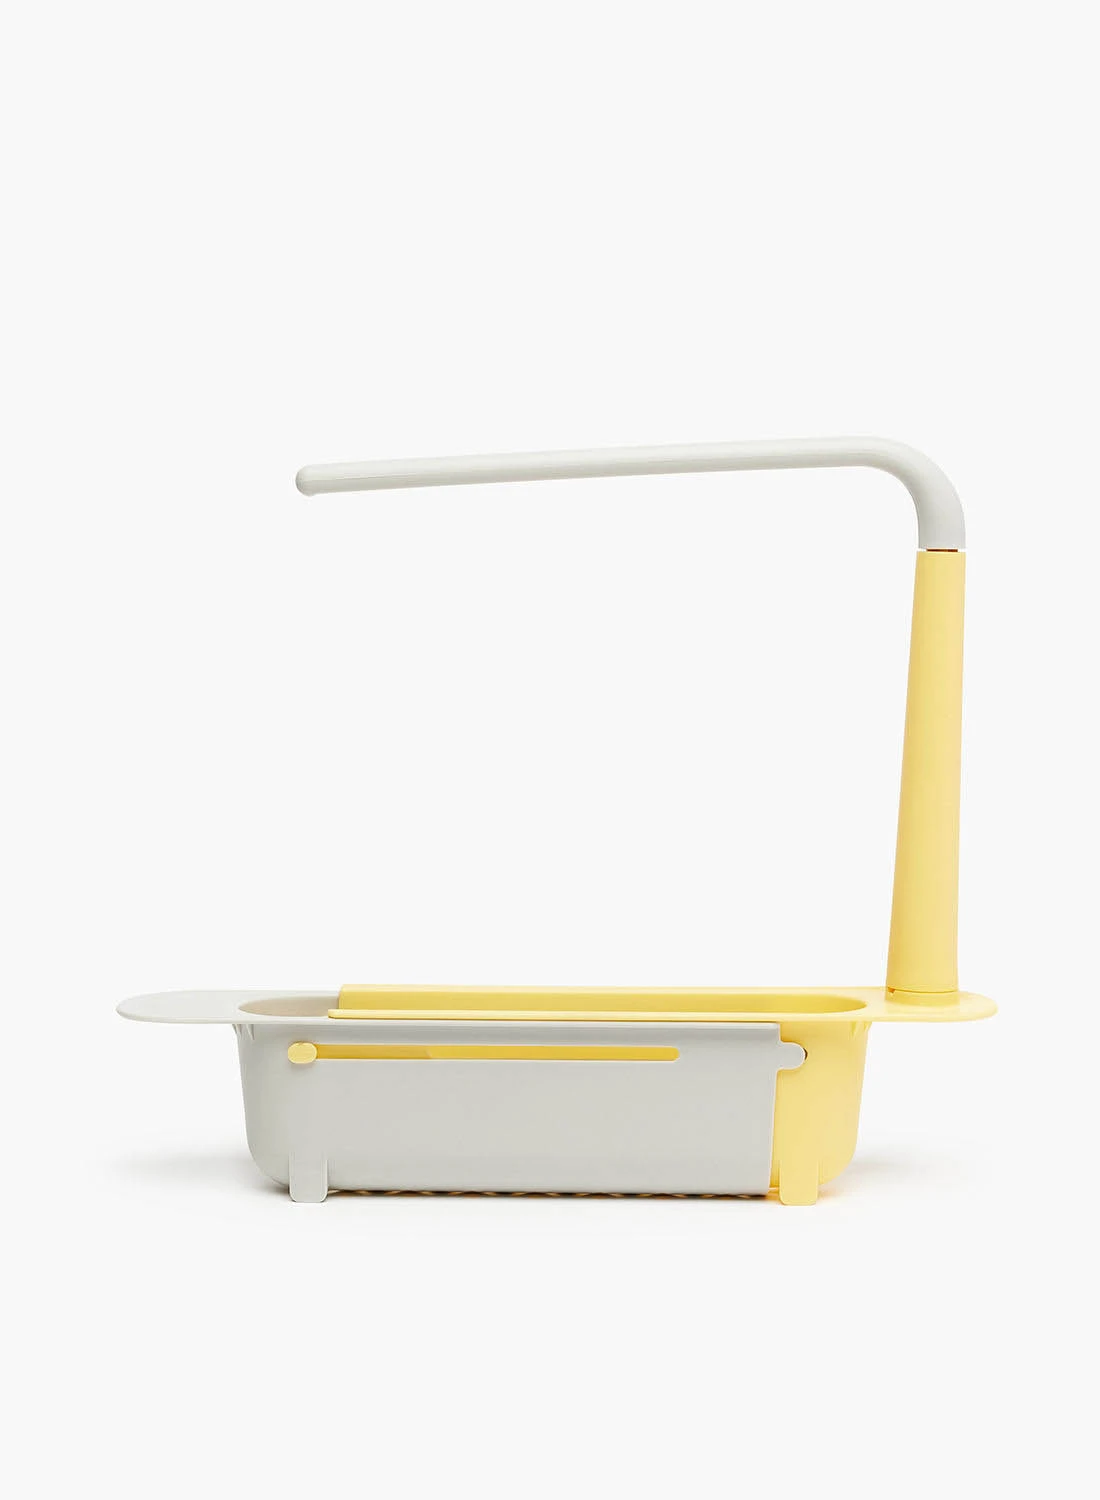 Amal Kitchen Sponge Holder - For Dish Cloth, Soap And Sponge Rack - Kitchen Accessories - Kitchen Tools - Sponge Rack/Yellow Grey 32 x 6 x 27cm